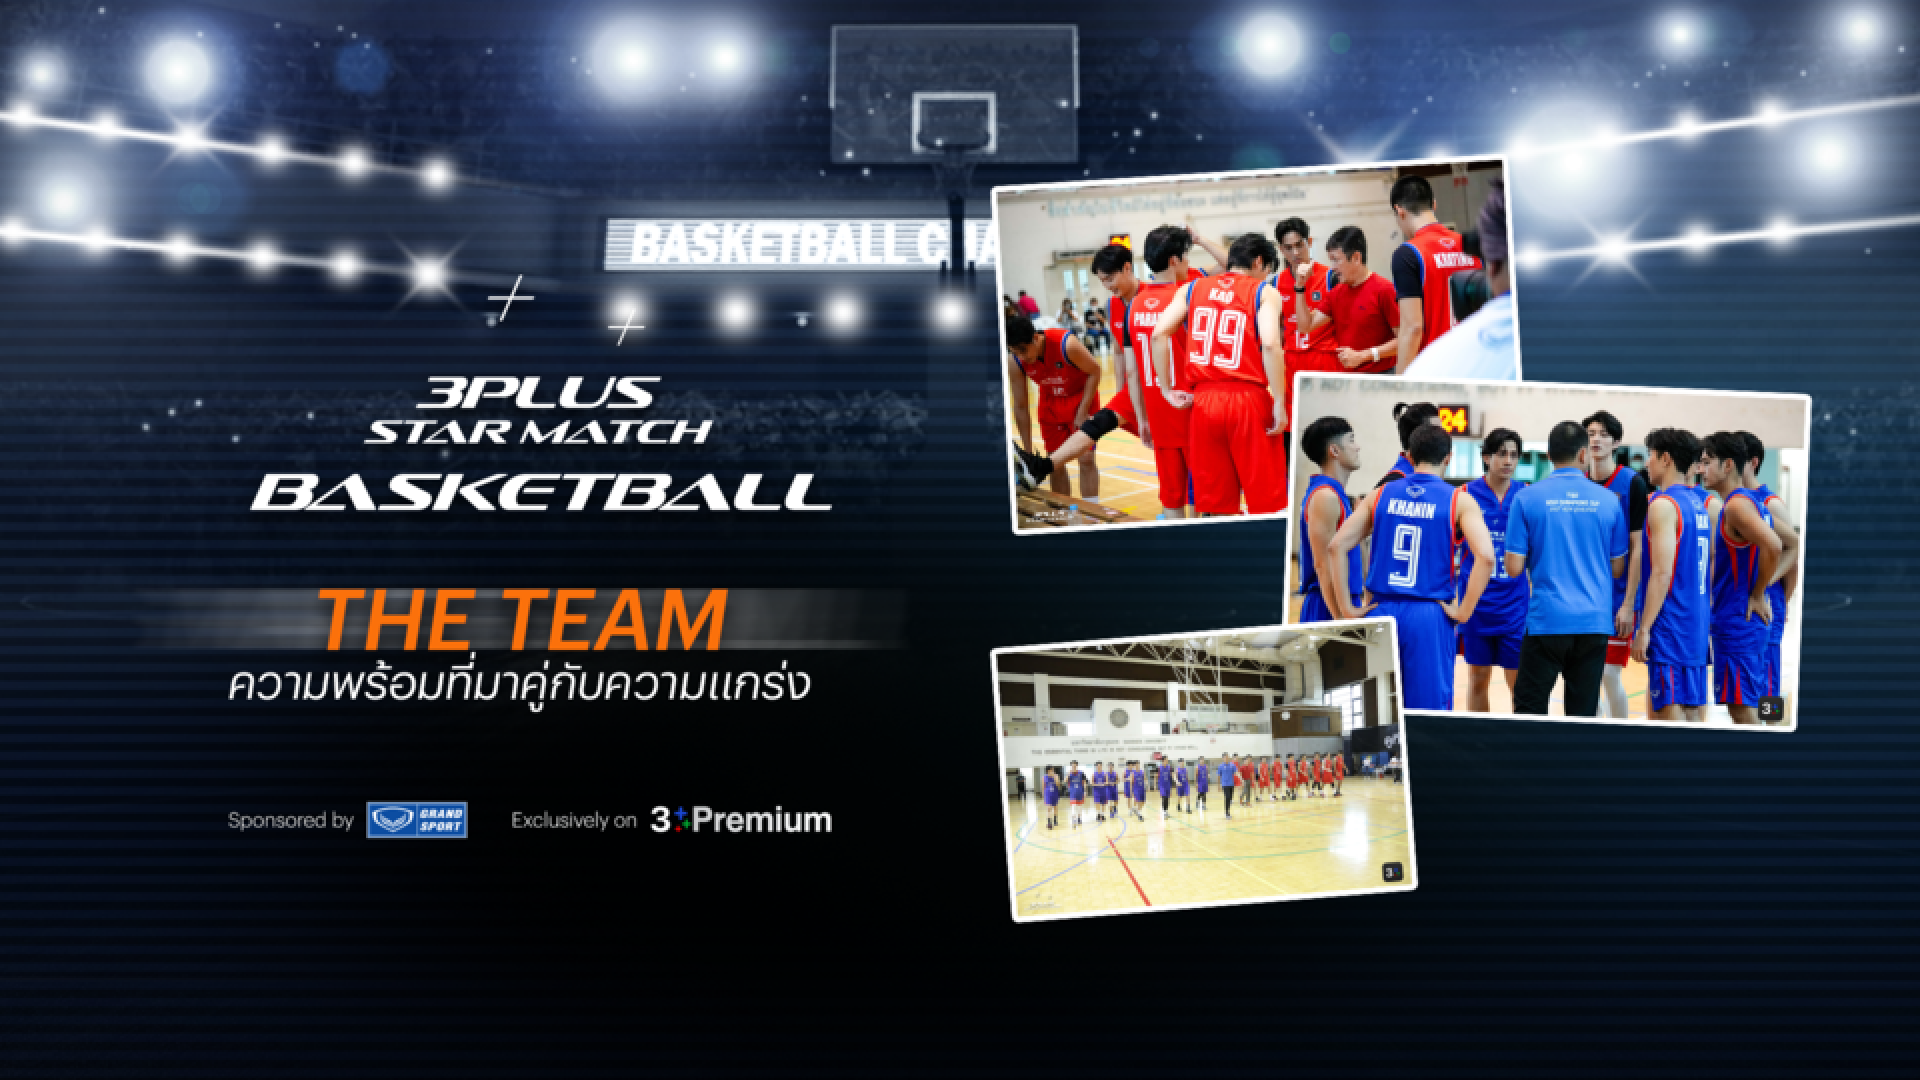 3Plus Star Match : Basketball Gallery - The Team